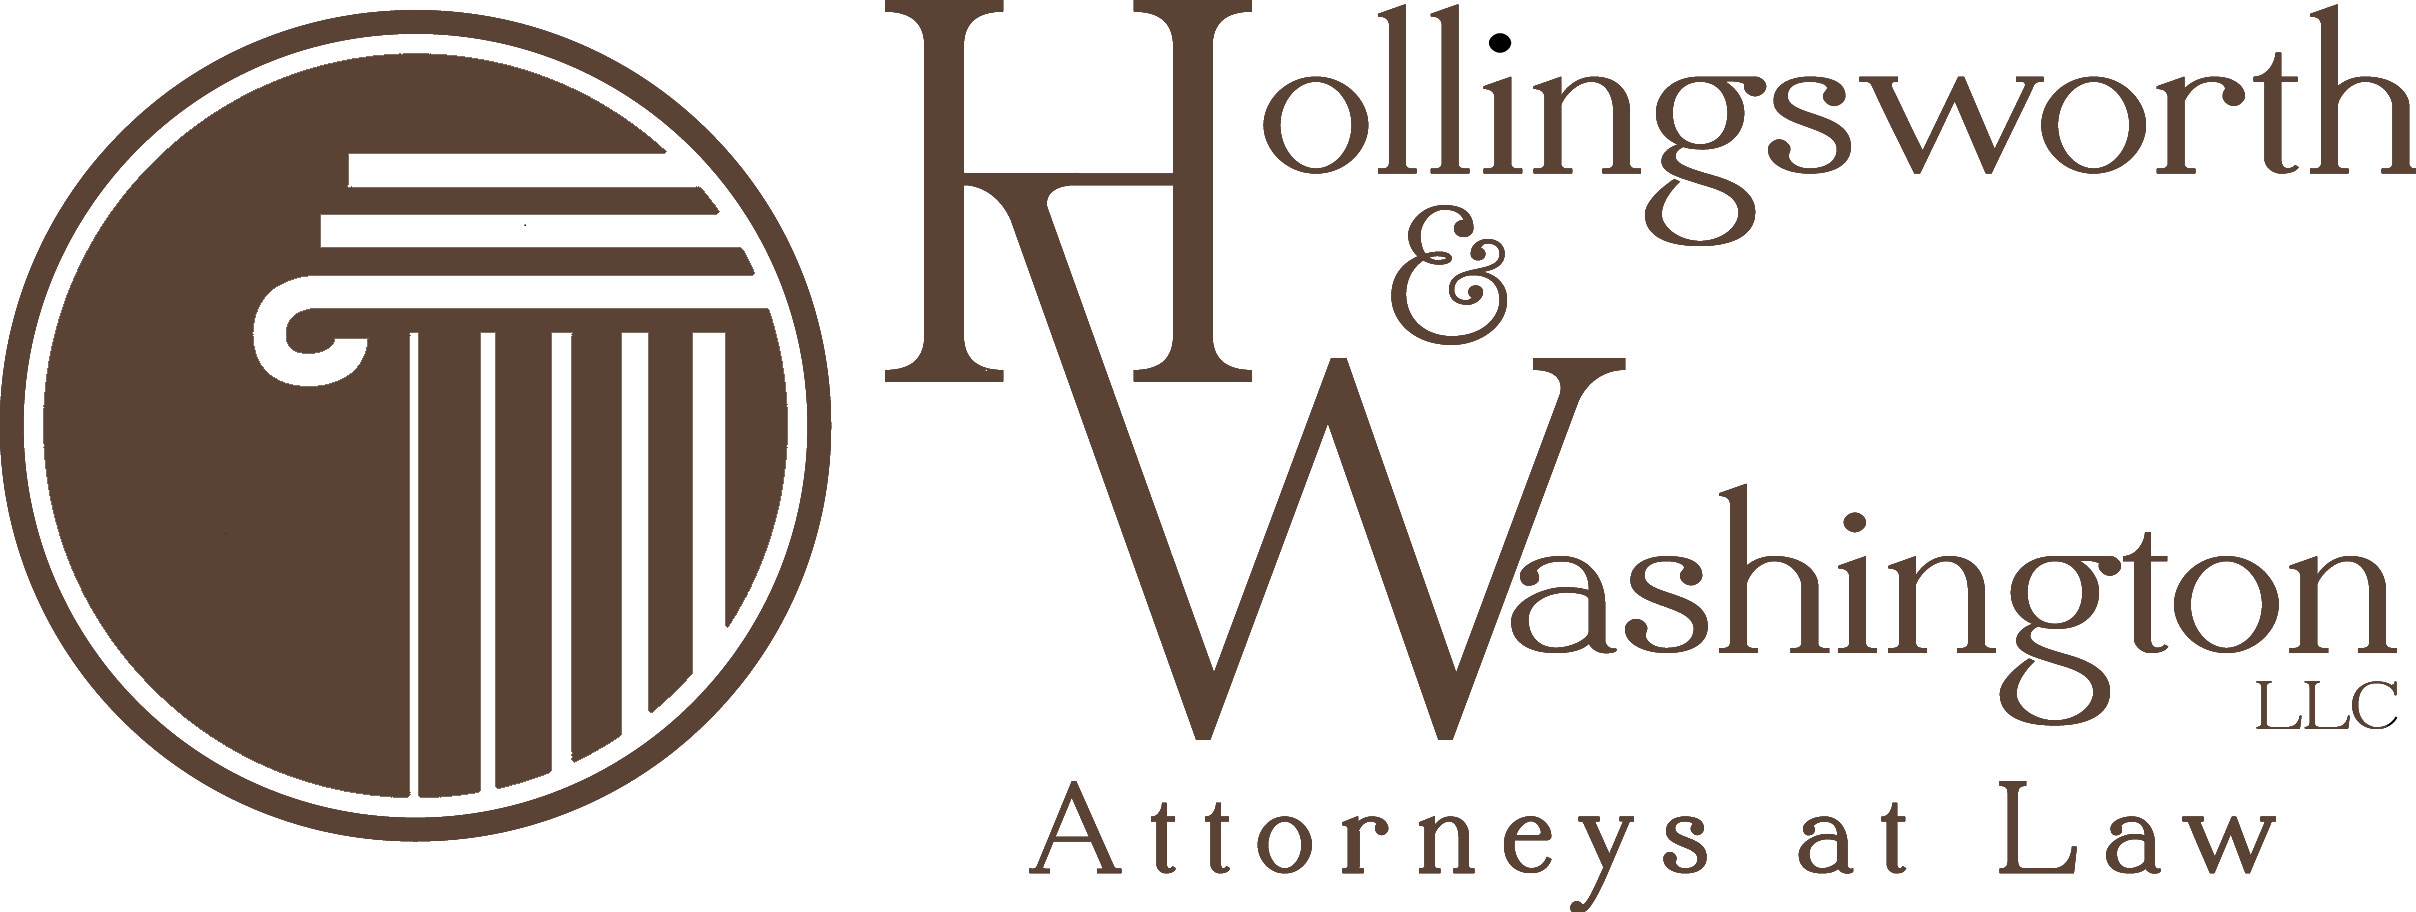 Hollingsworth & Washington Attorneys at Law Logo